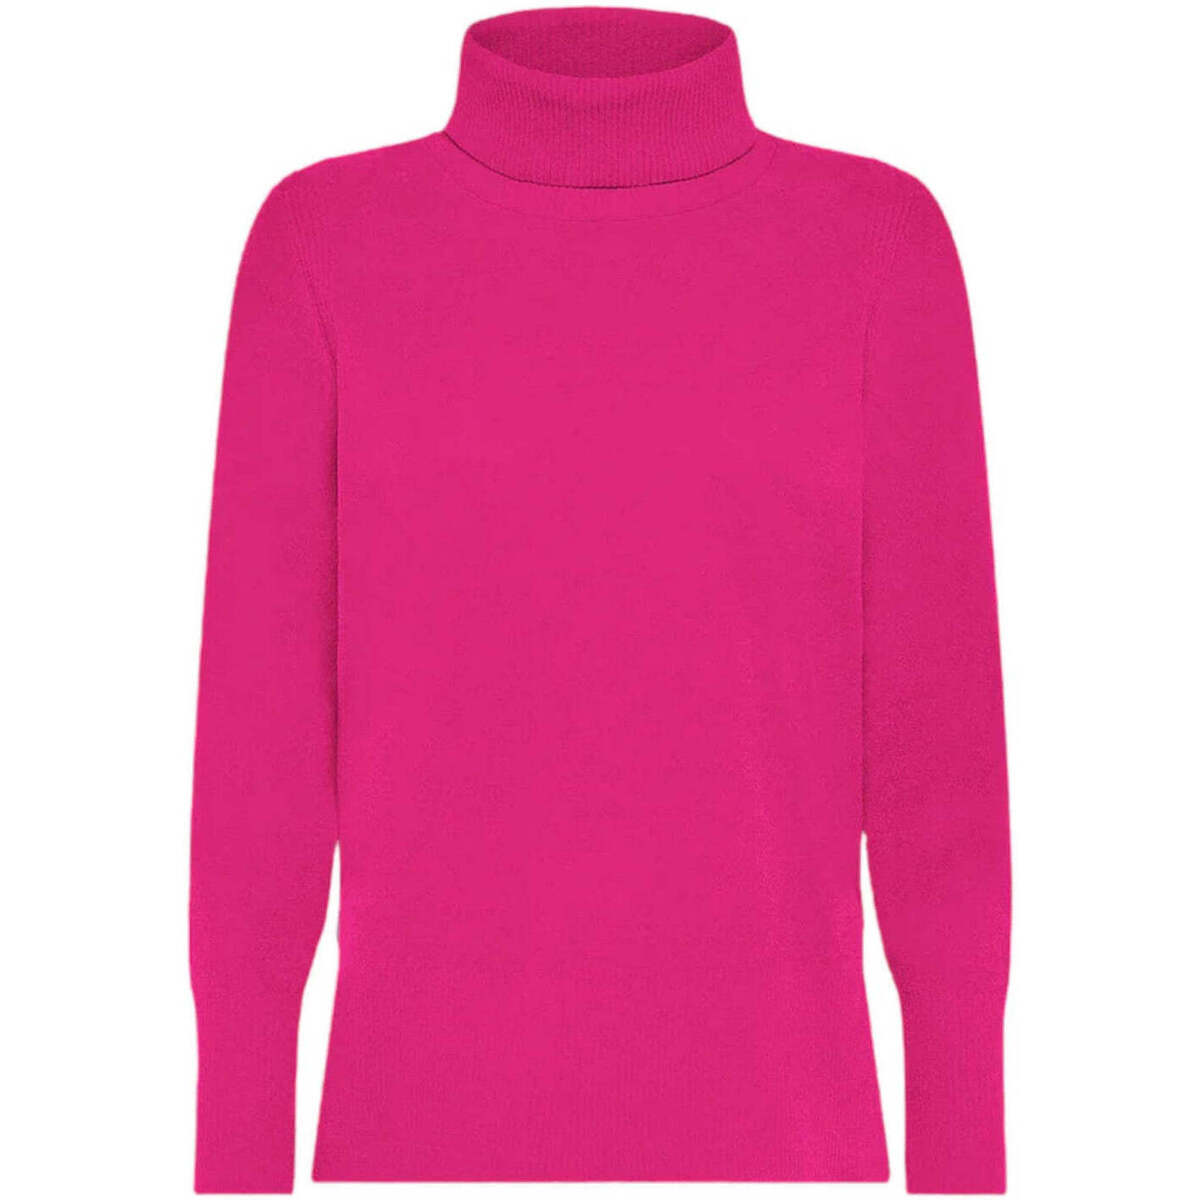 Kleidung Damen Pullover Rrd - Roberto Ricci Designs  Violett